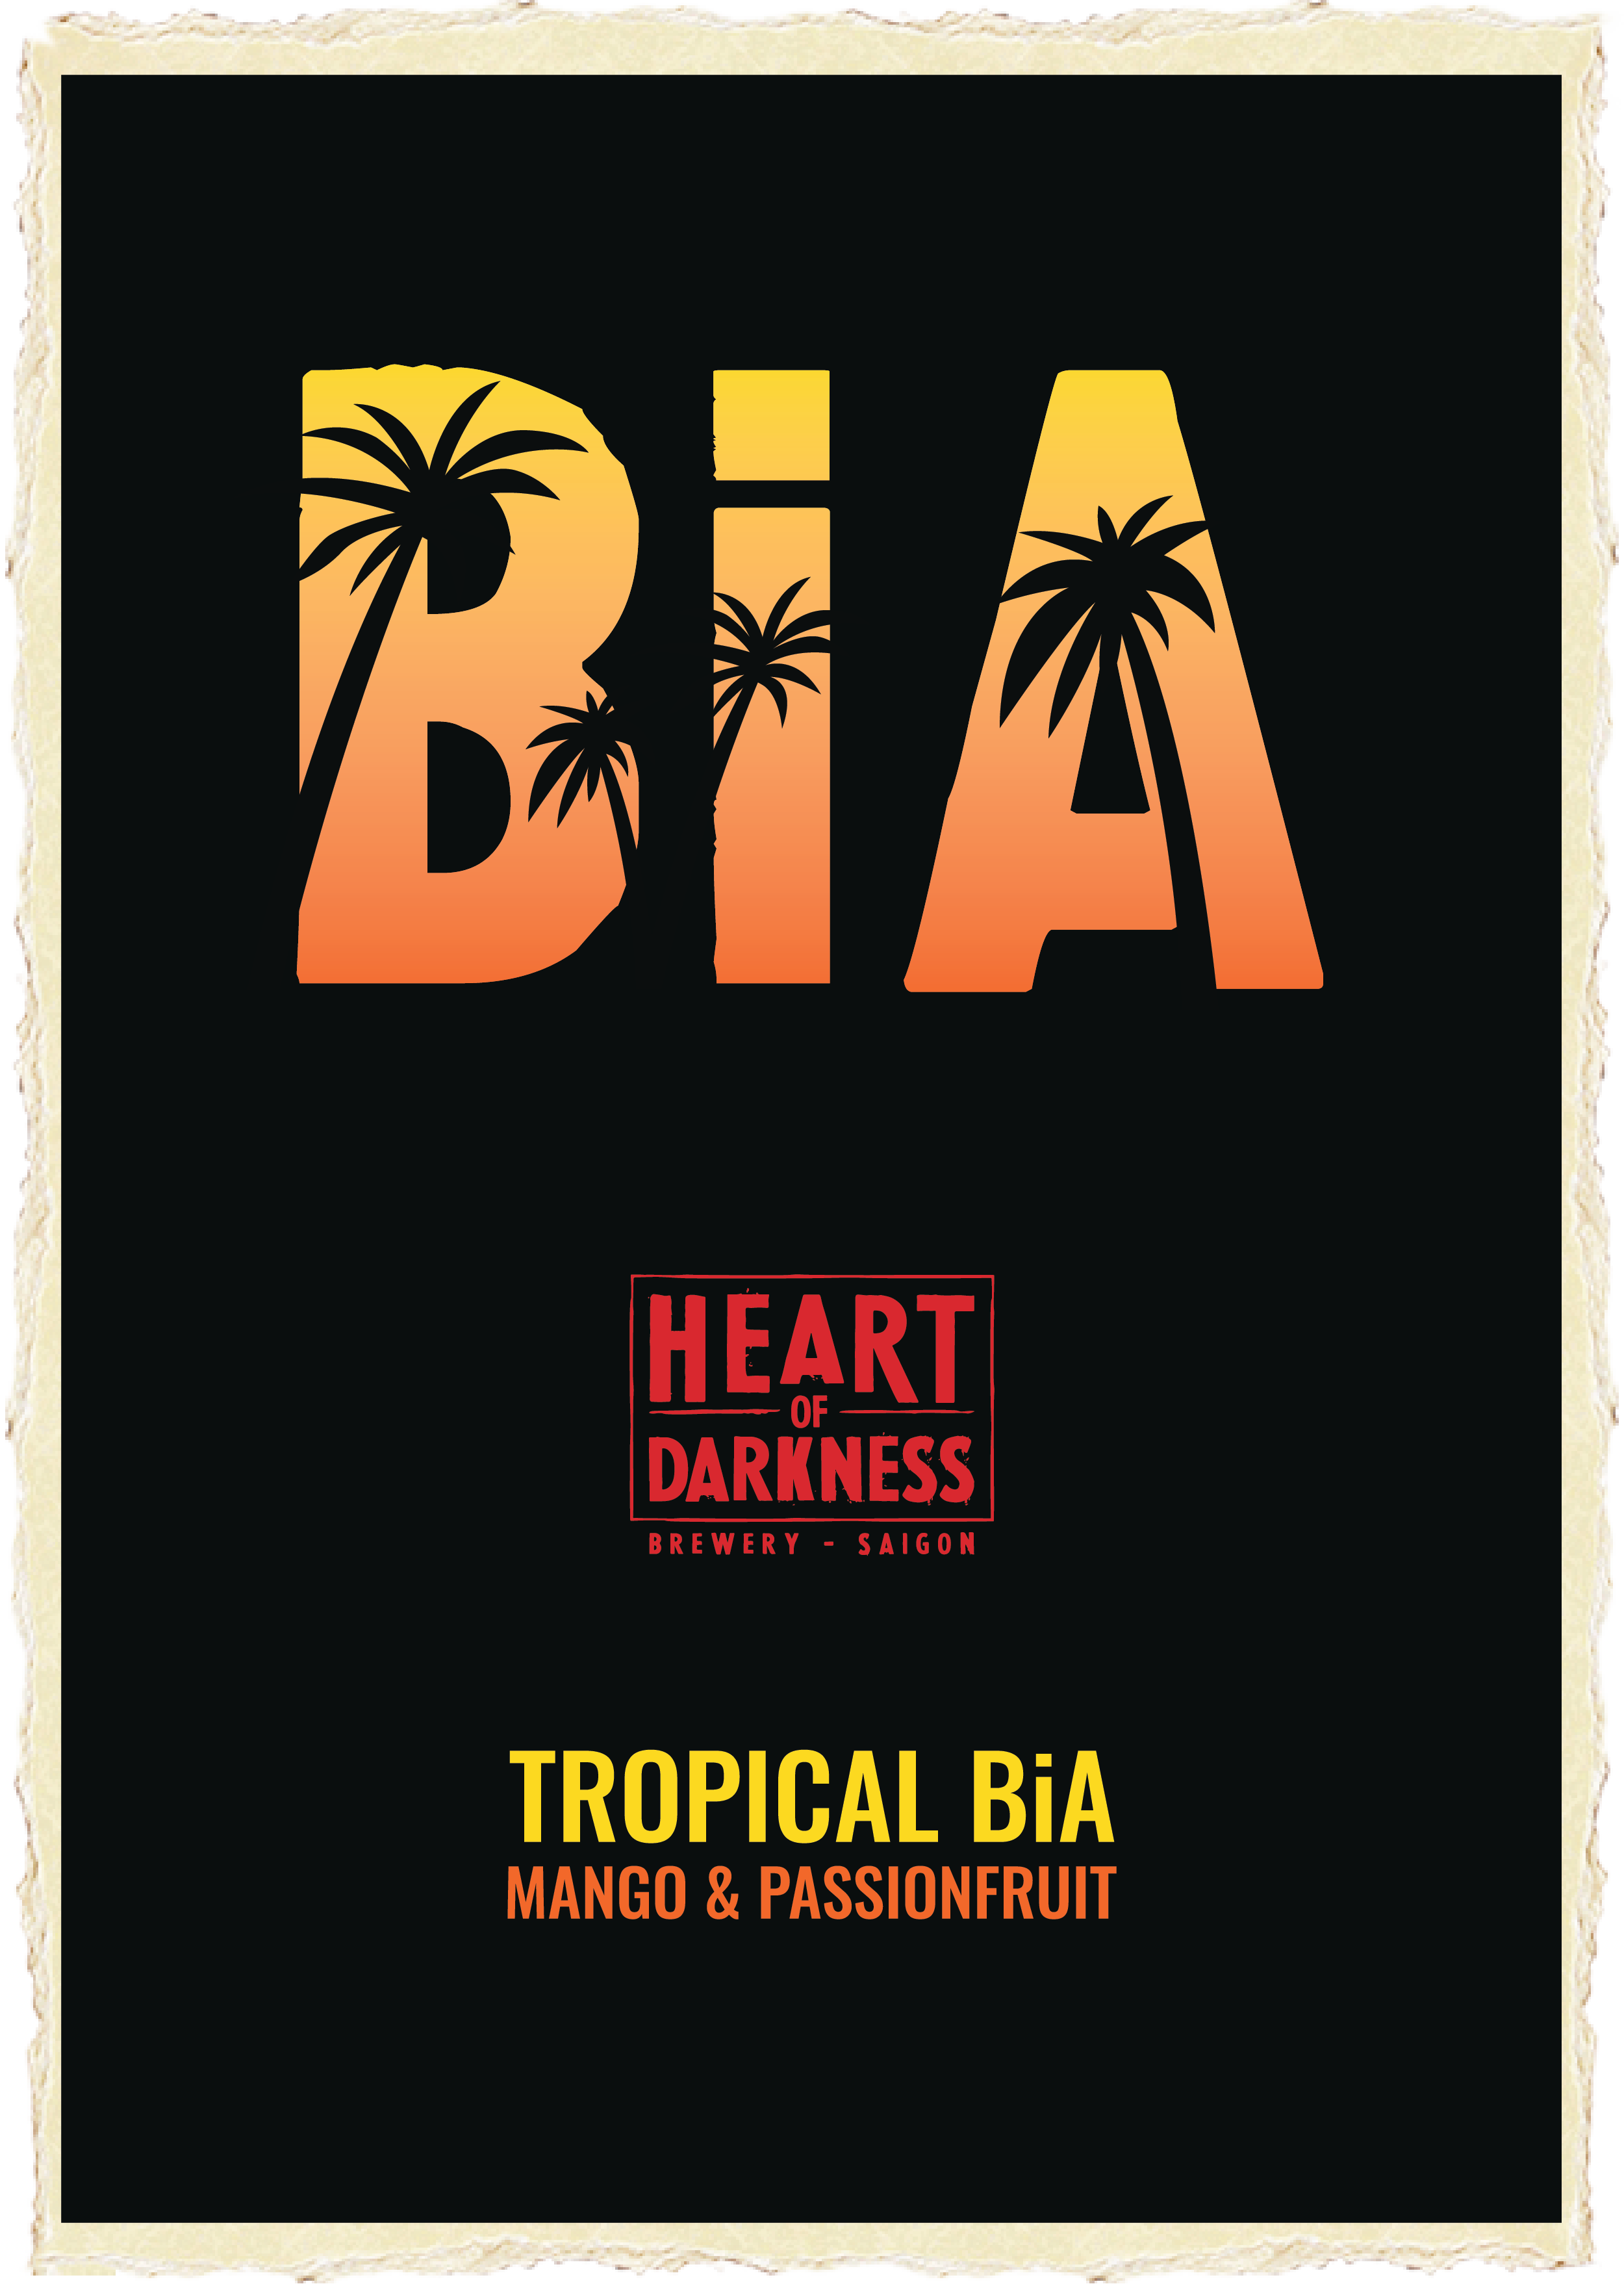 Tropical BiA Heart of Darkness Brewery Vietnam Craft Beer